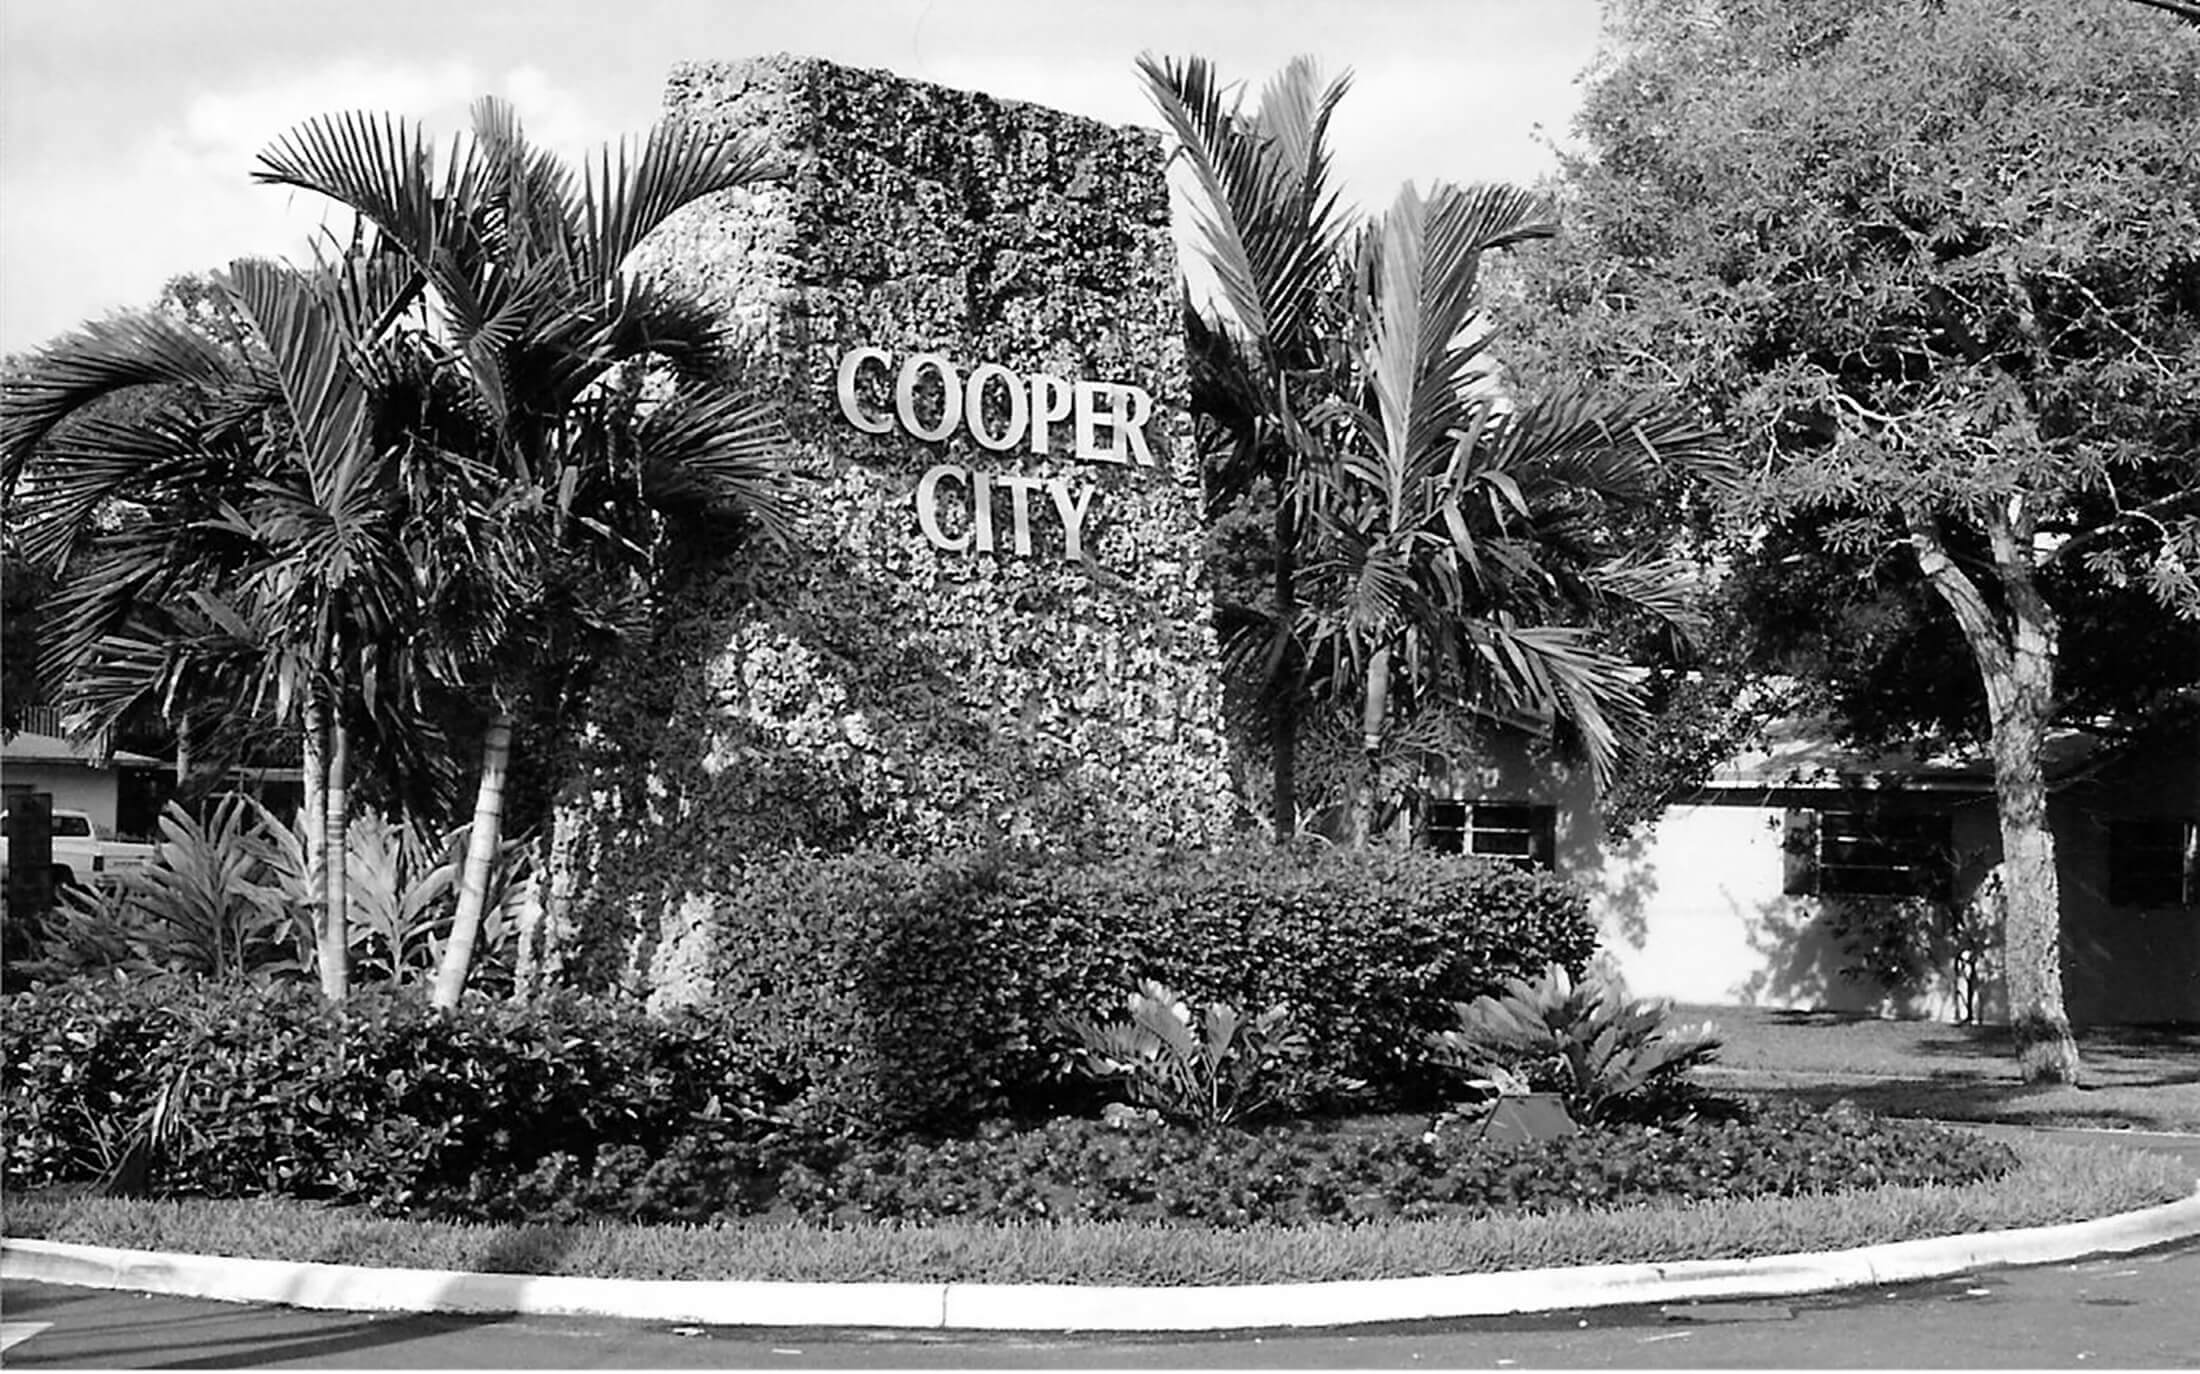 Cooper City SEO Company | Florida SEO Services